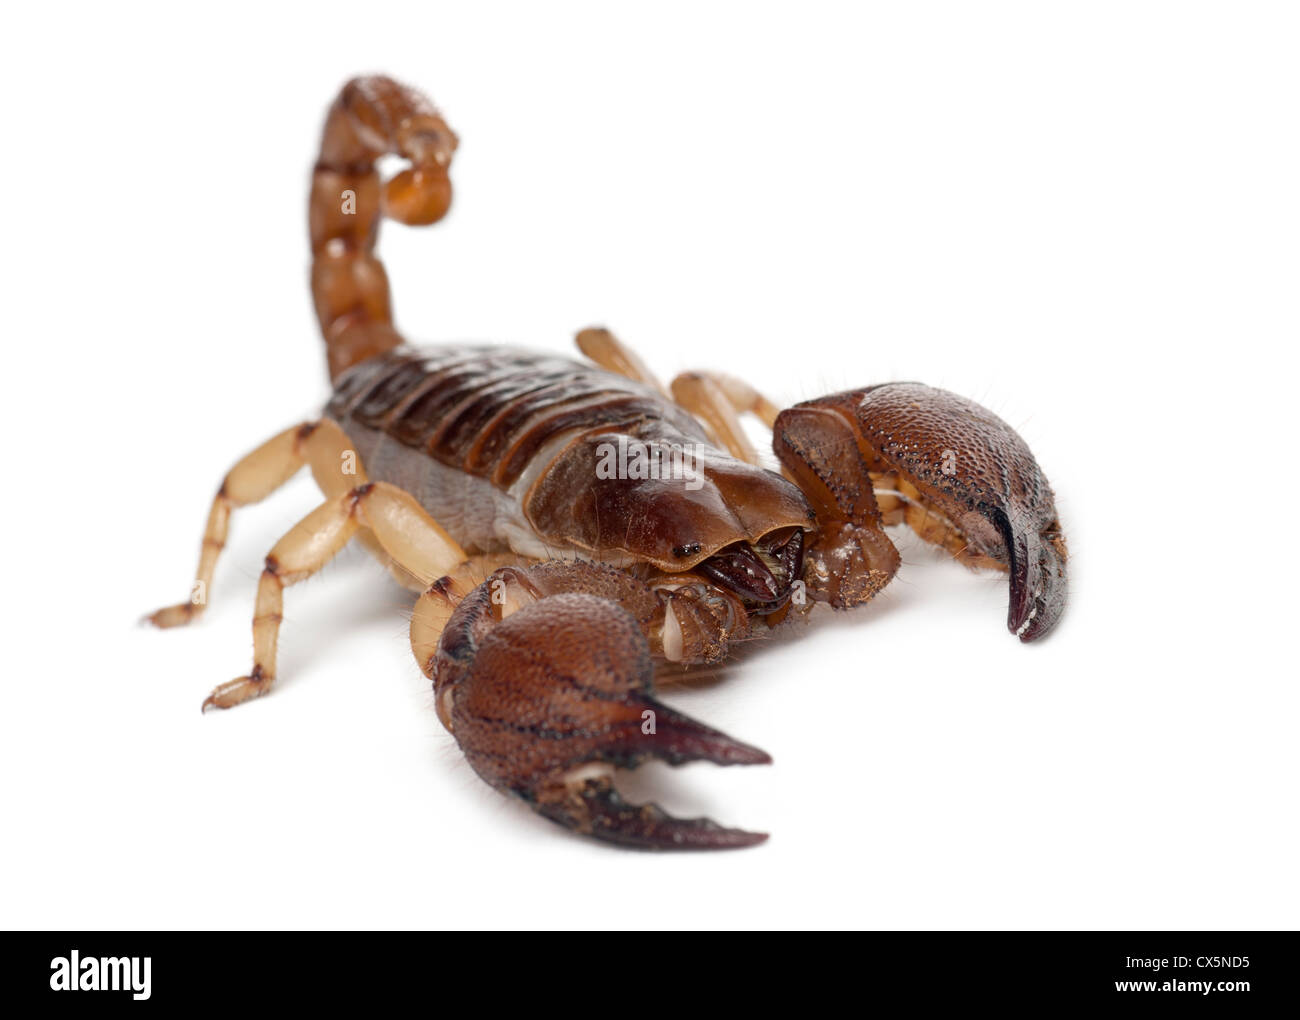 Shiny burrowing scorpion or Yellowlegged creeping scorpion, Opistophthalmus glabrifrons, against white background Stock Photo